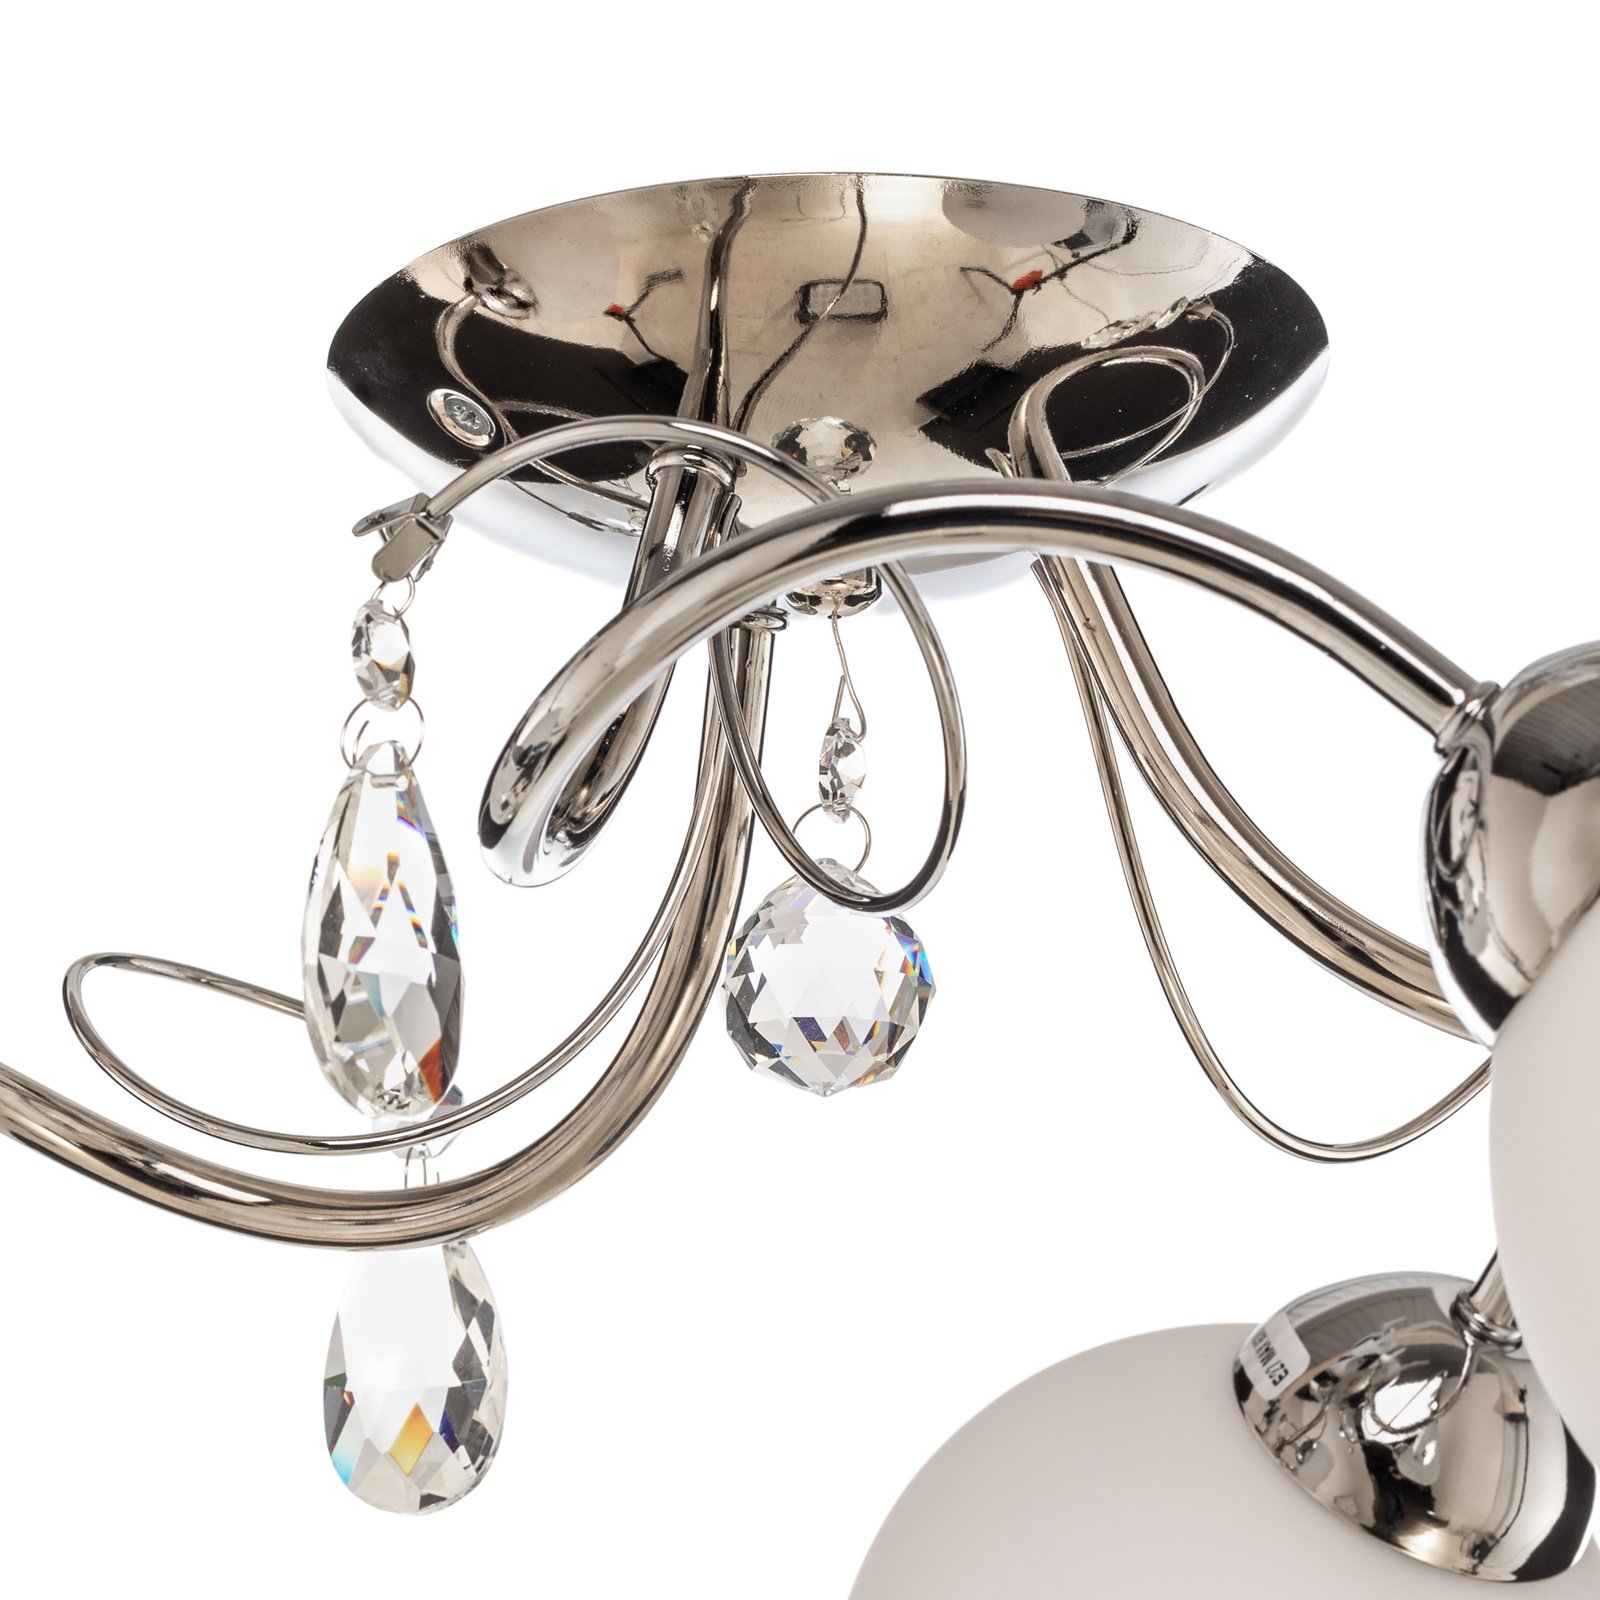 Plafondlamp Livia Pro, chroom/wit, 3-lamps